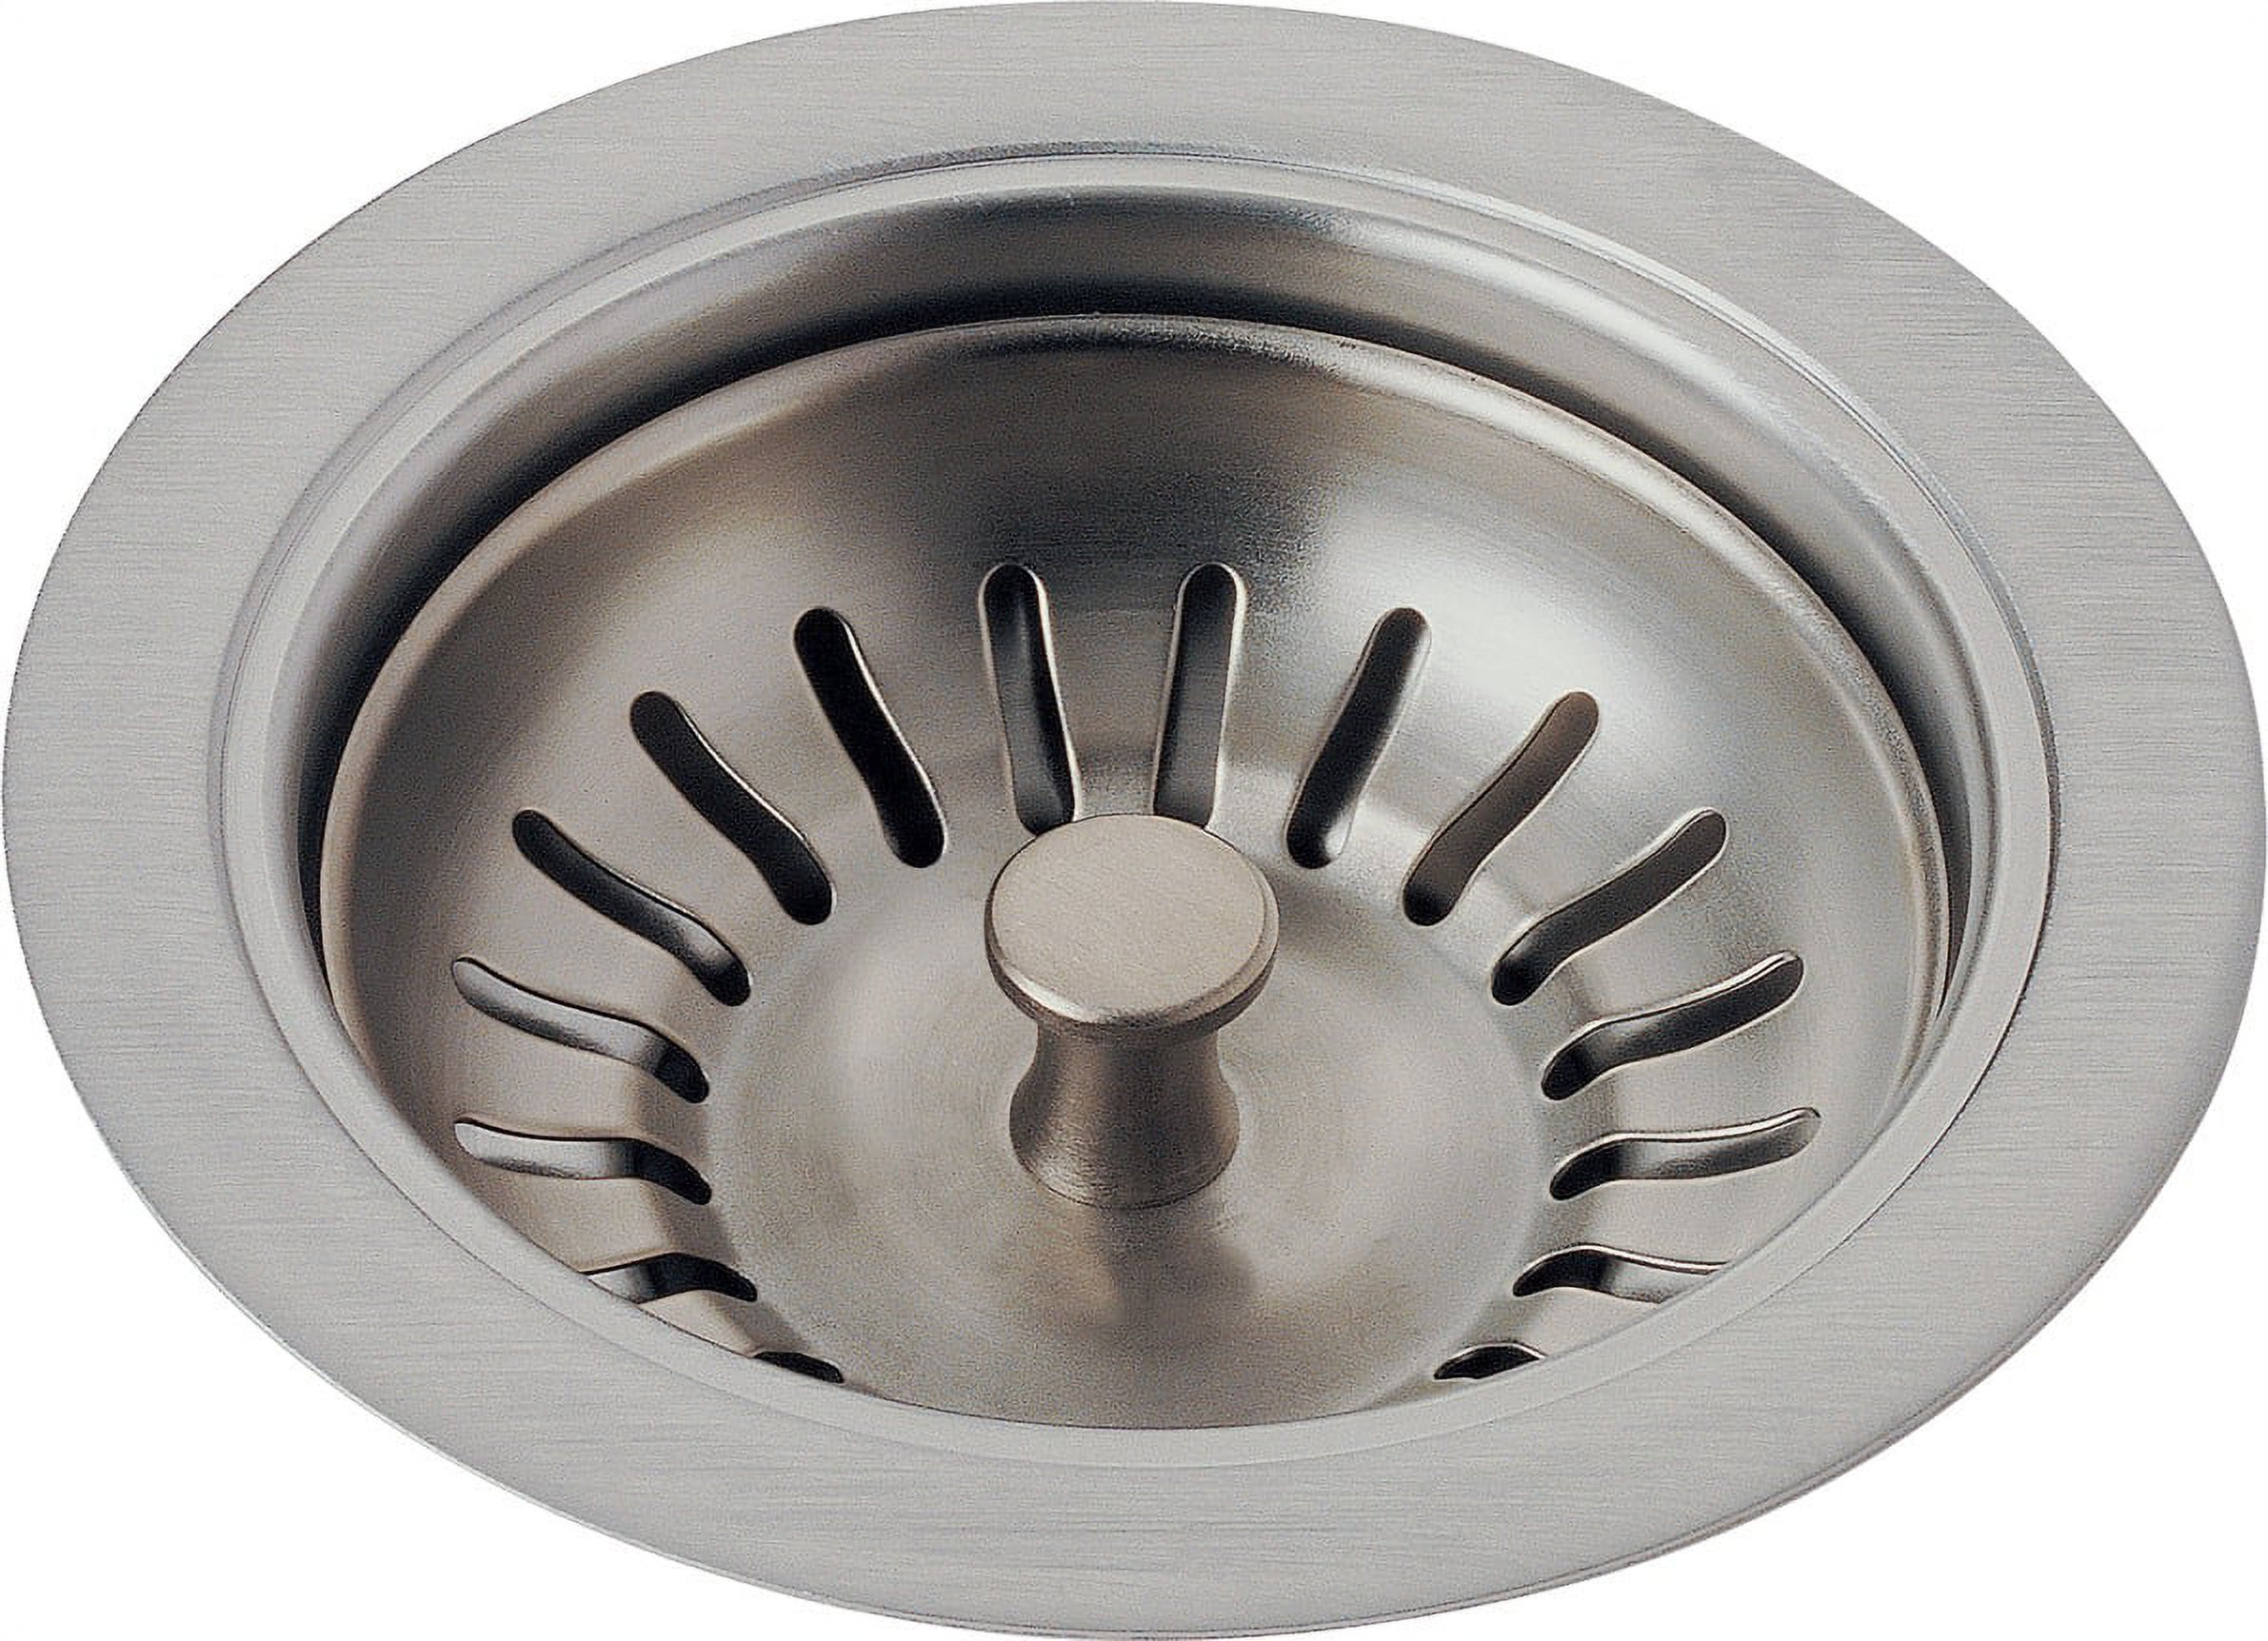 Delta 72010 Basket Strainer Flange For Standard Kitchen Sink Drain Openings - Chrome - image 4 of 7